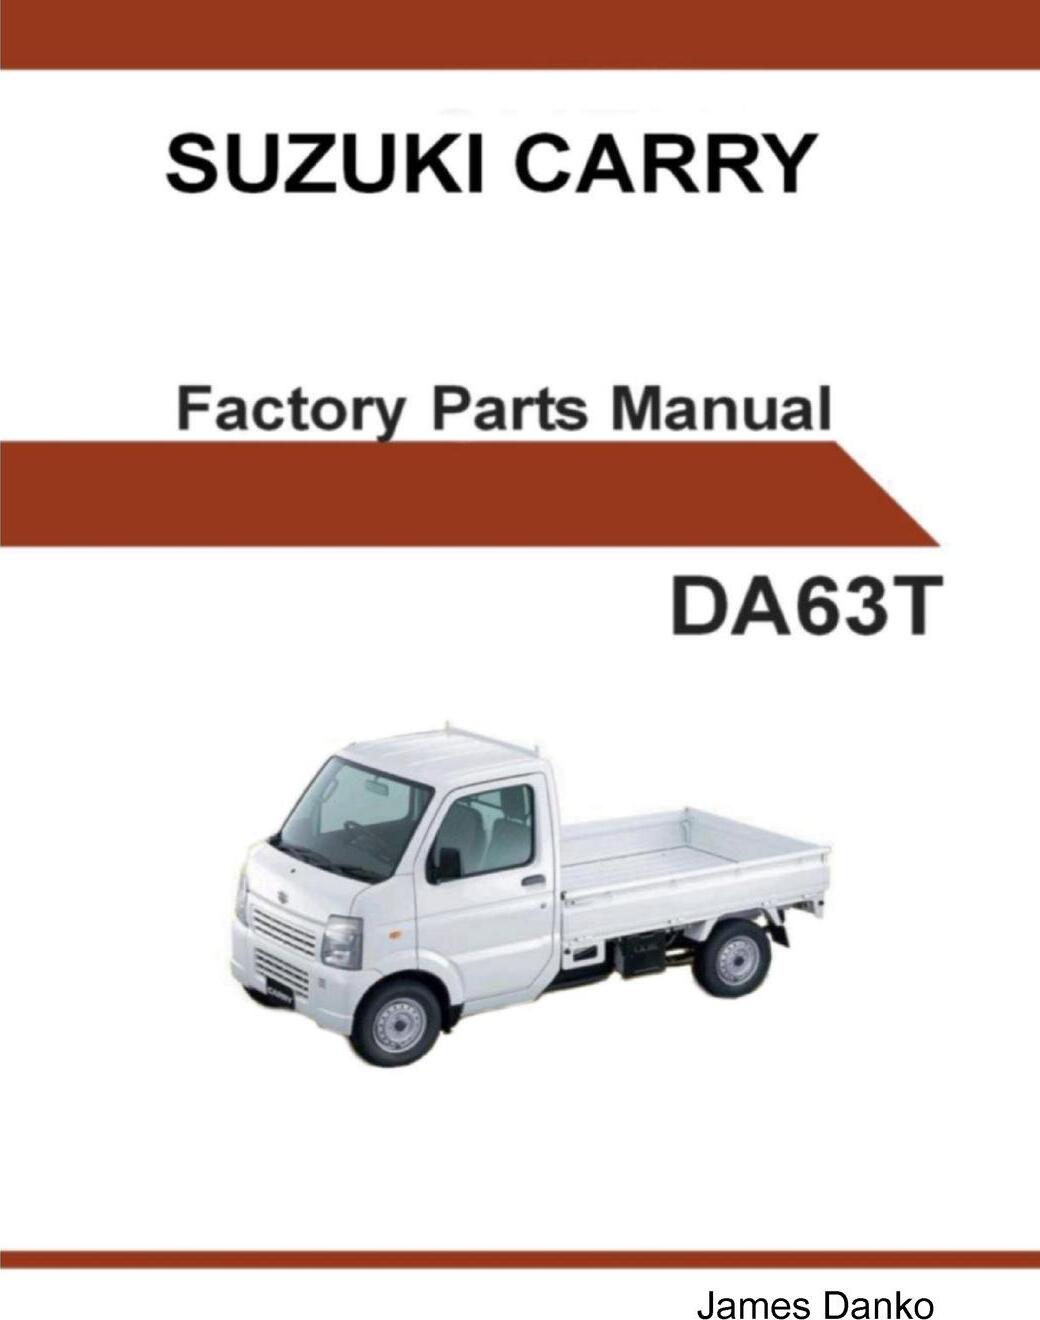 фото Suzuki Carry DA63T English Factory Parts Manual